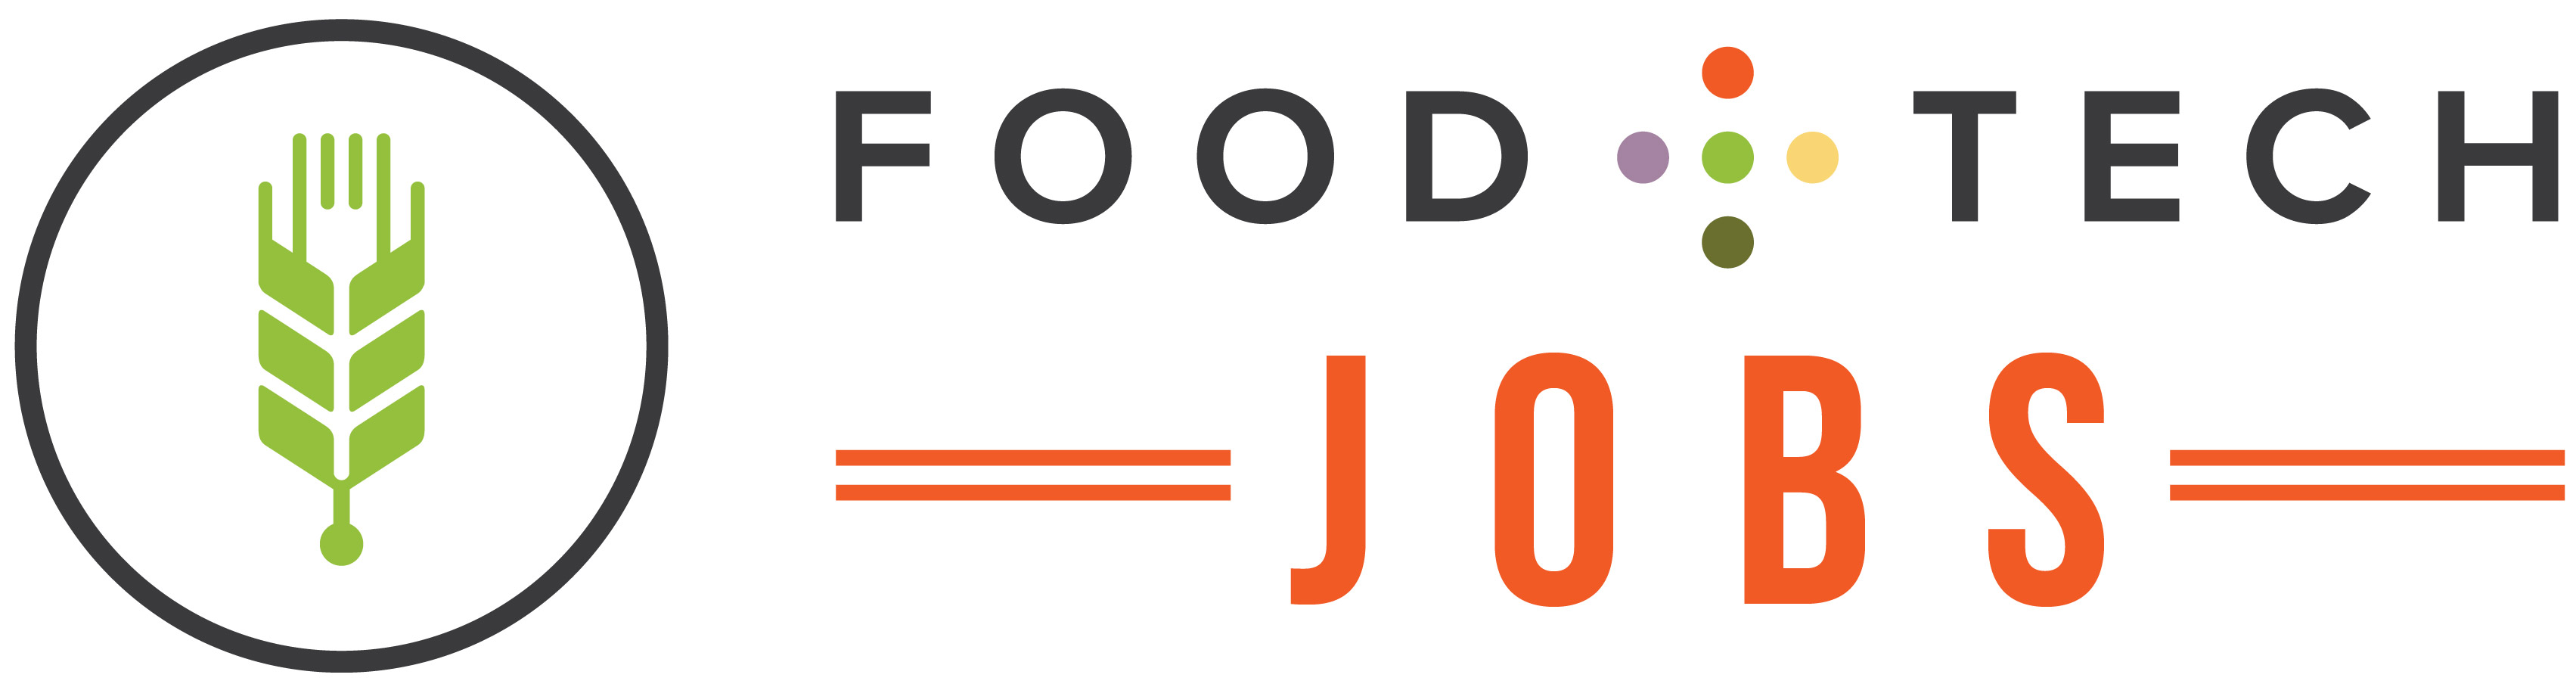 COinBase⚡customER⚡caRE NumBer1805⚡214⚡4838 - Food+Tech Jobs